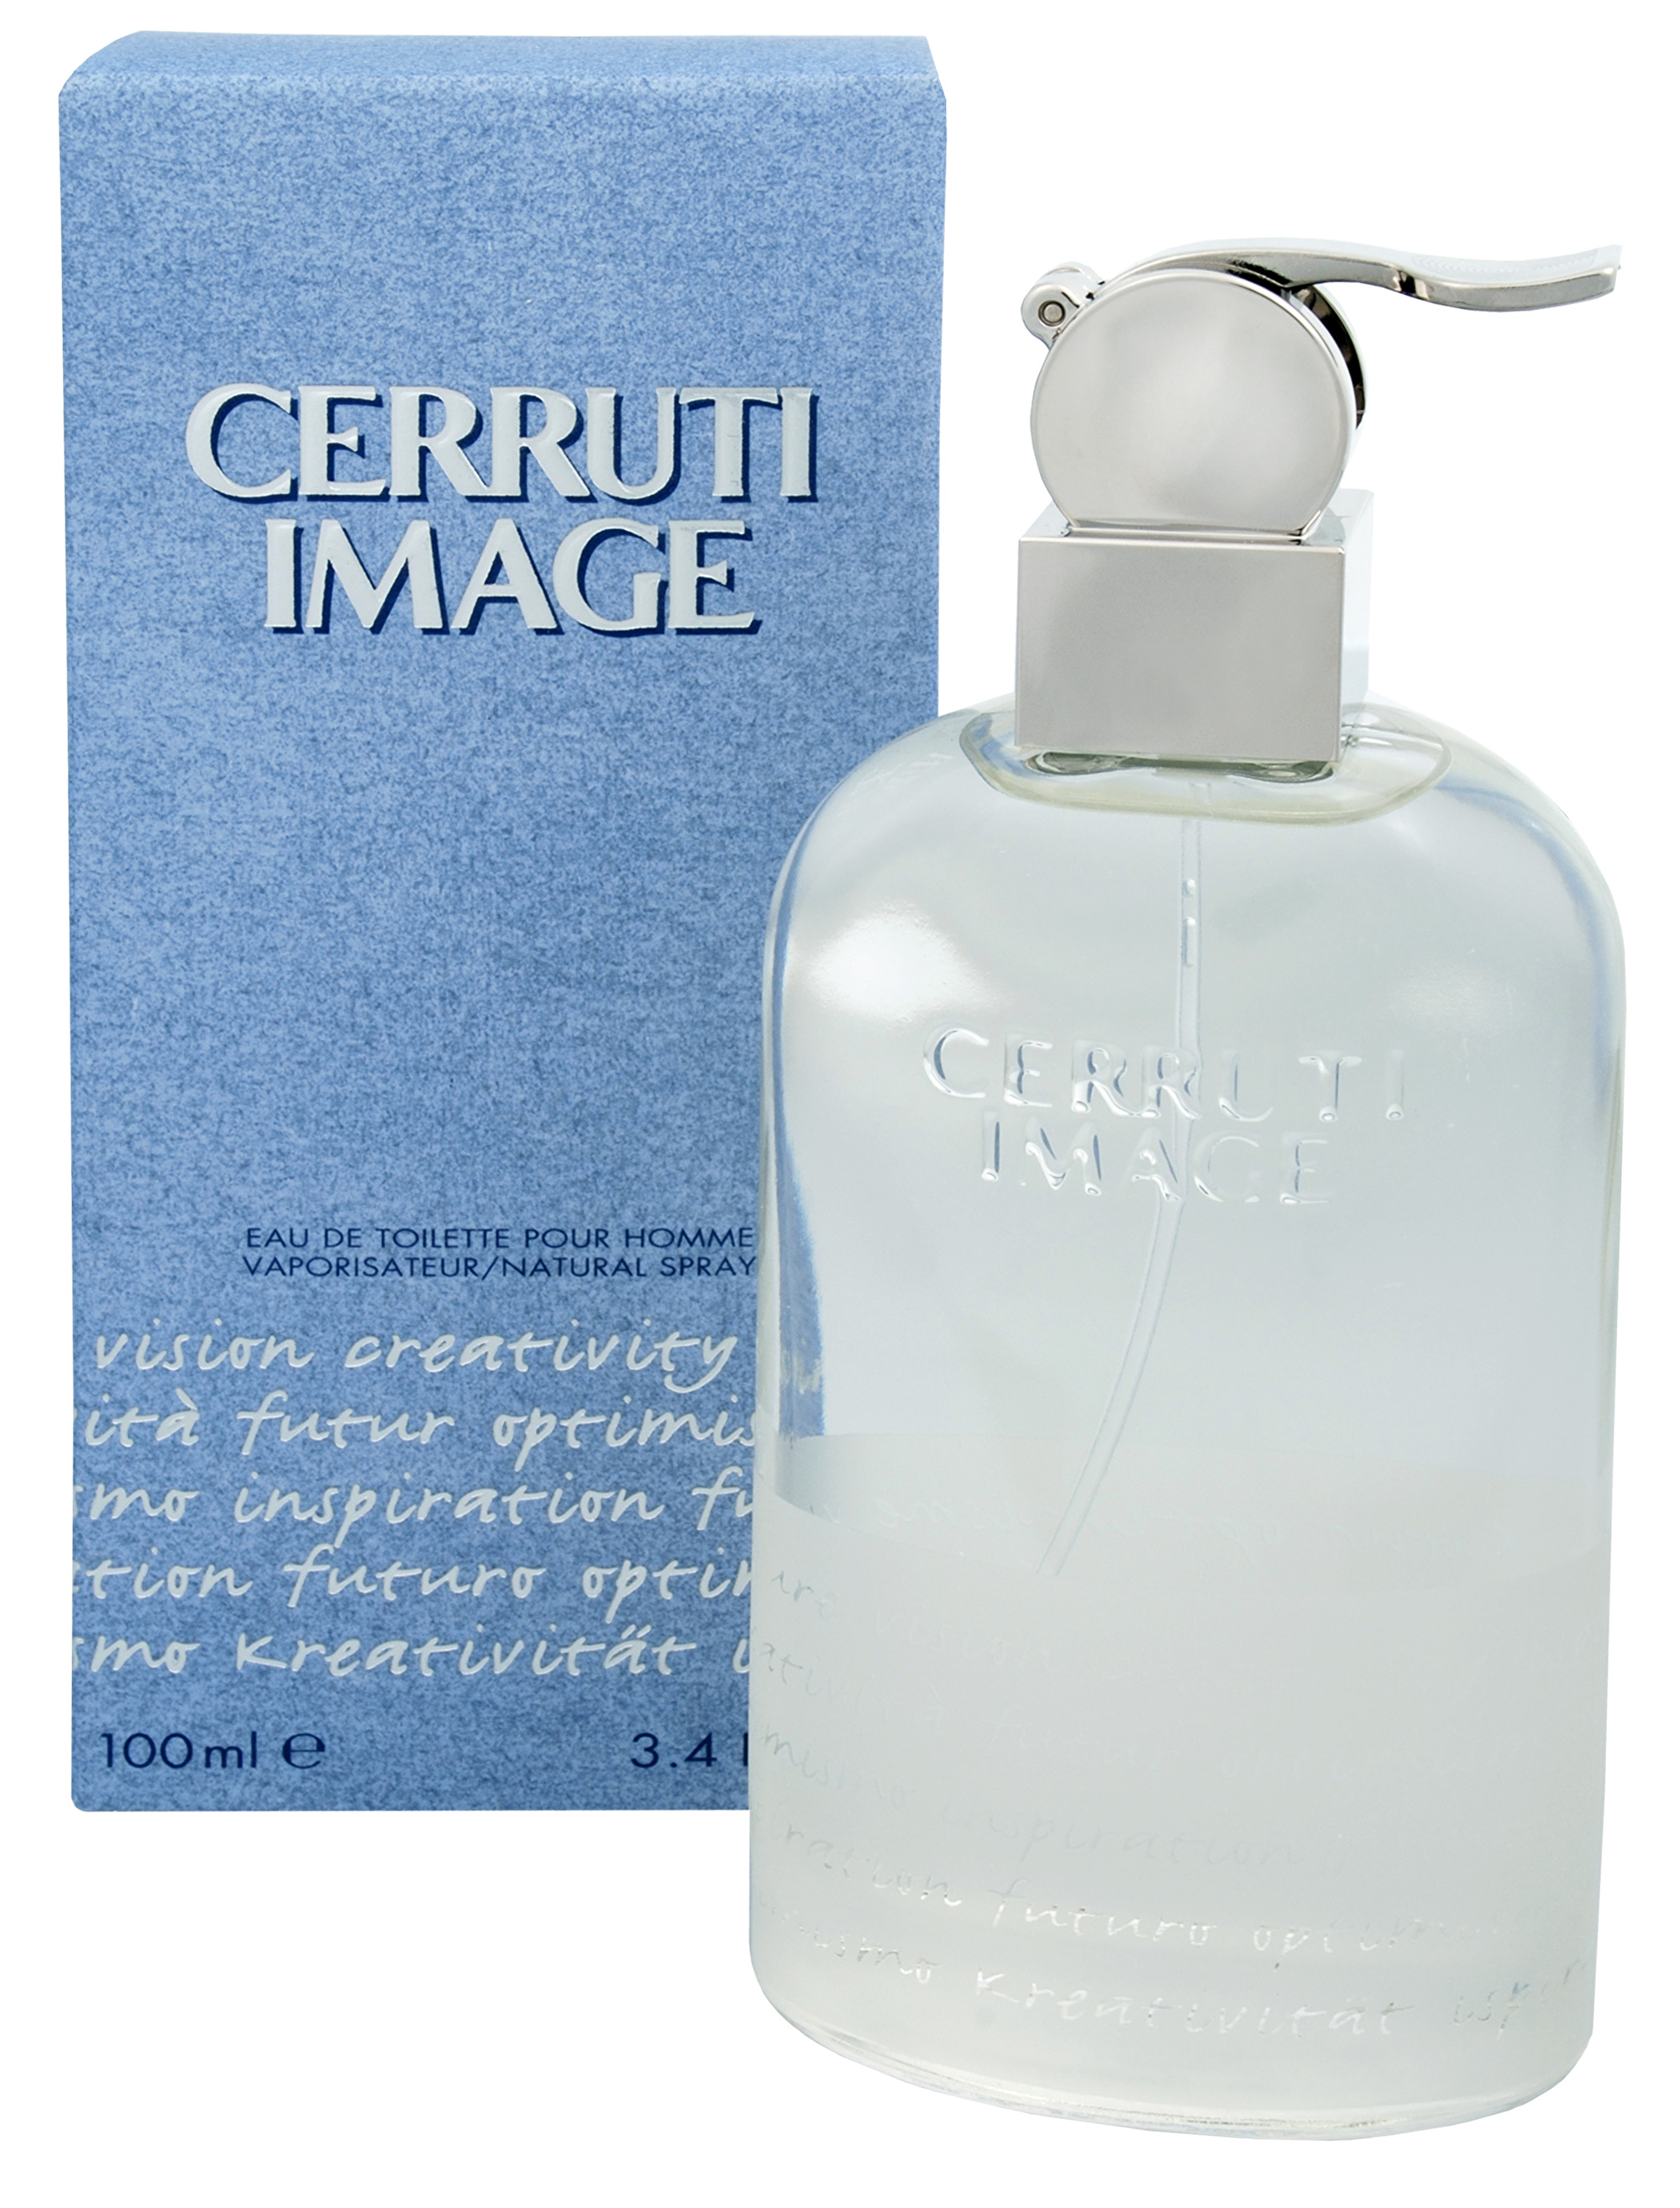 Cerruti Image Homme - EDT 100 ml